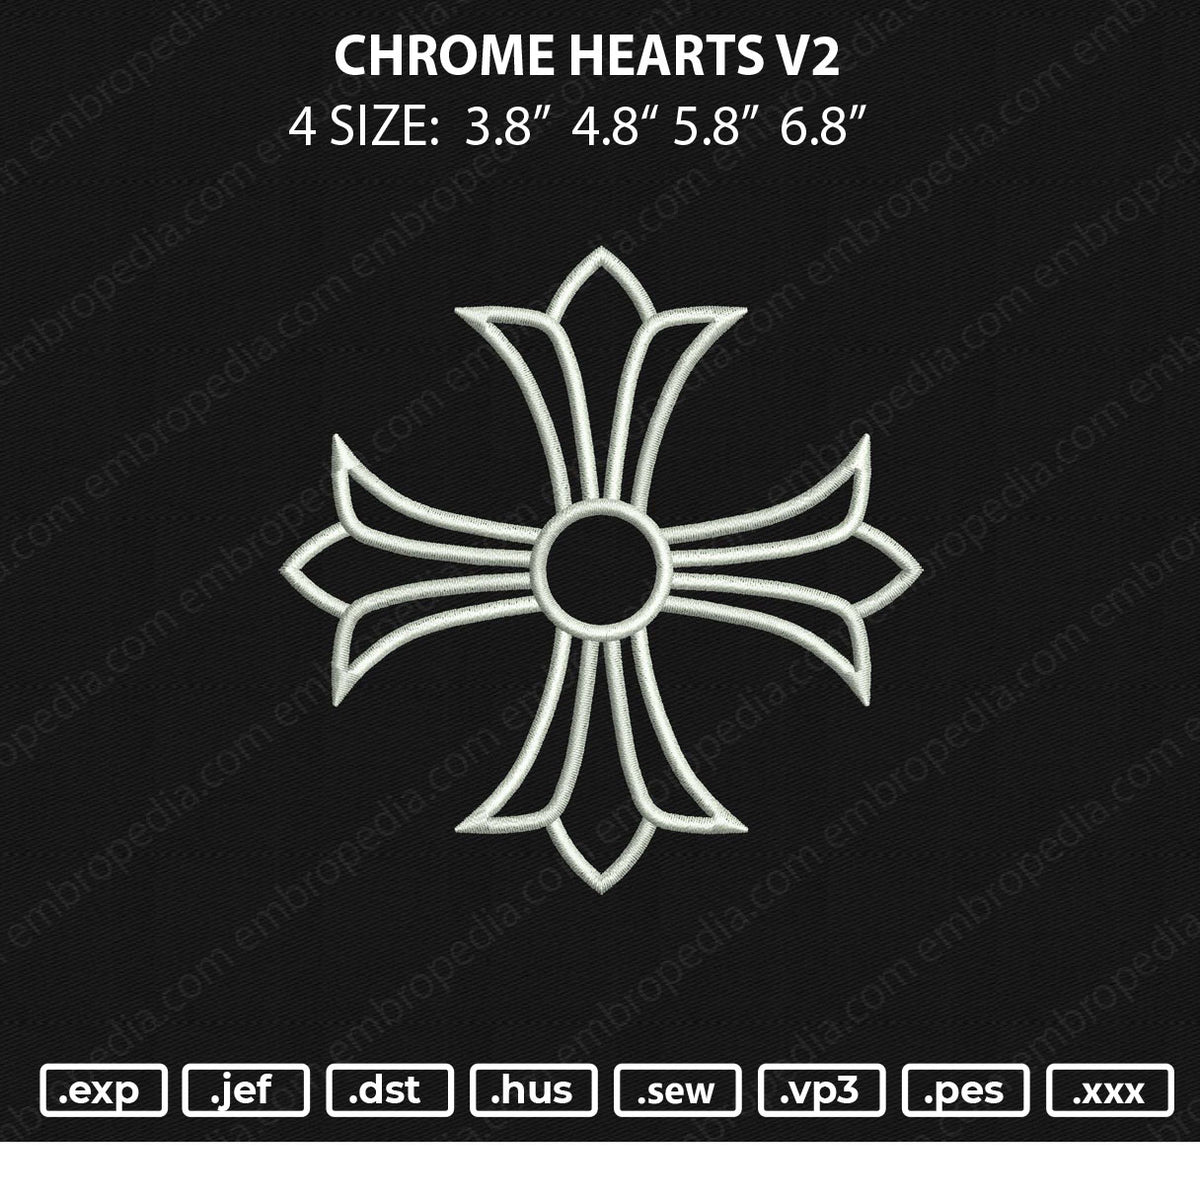 10 Crome Hearts store ideas  chrome hearts, chrome, design